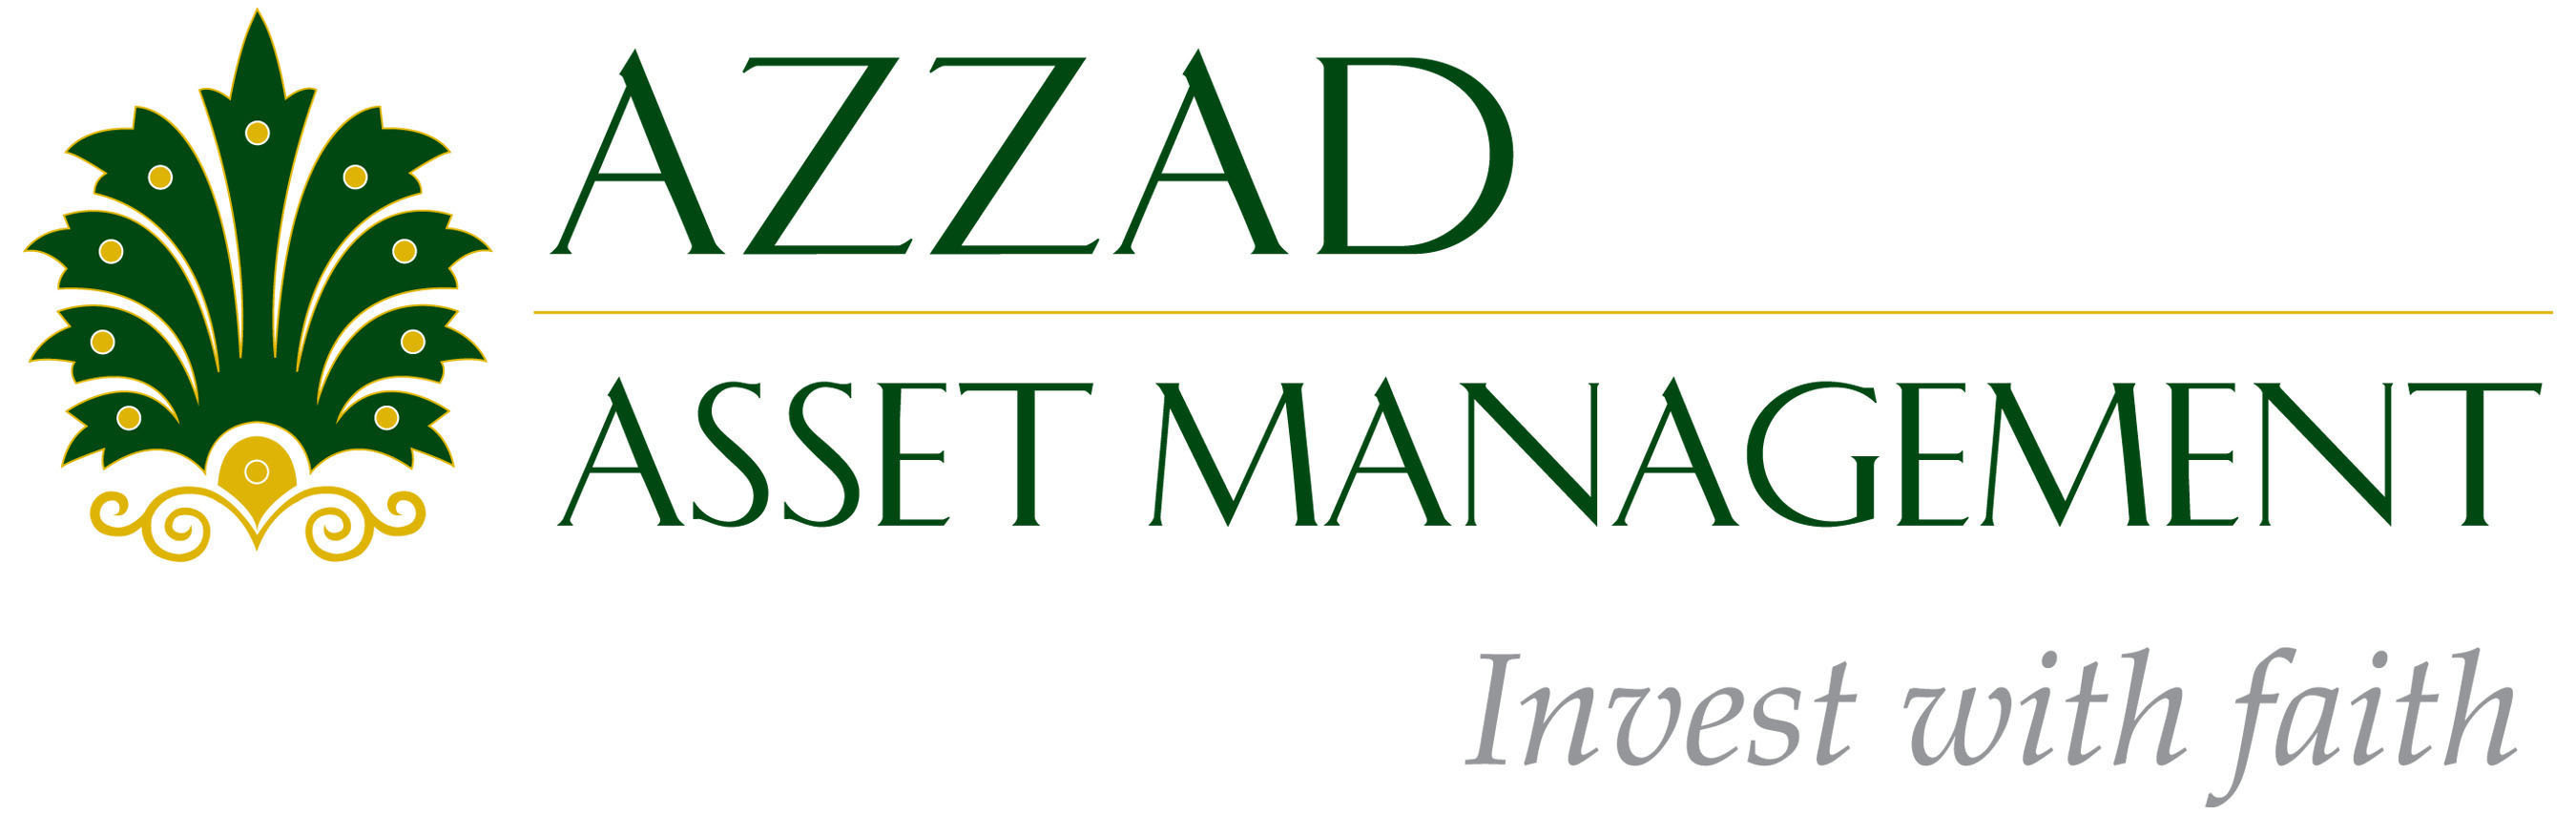 Azzad Asset Management Logo. (PRNewsFoto/Azzad Asset Management) (PRNewsFoto/)